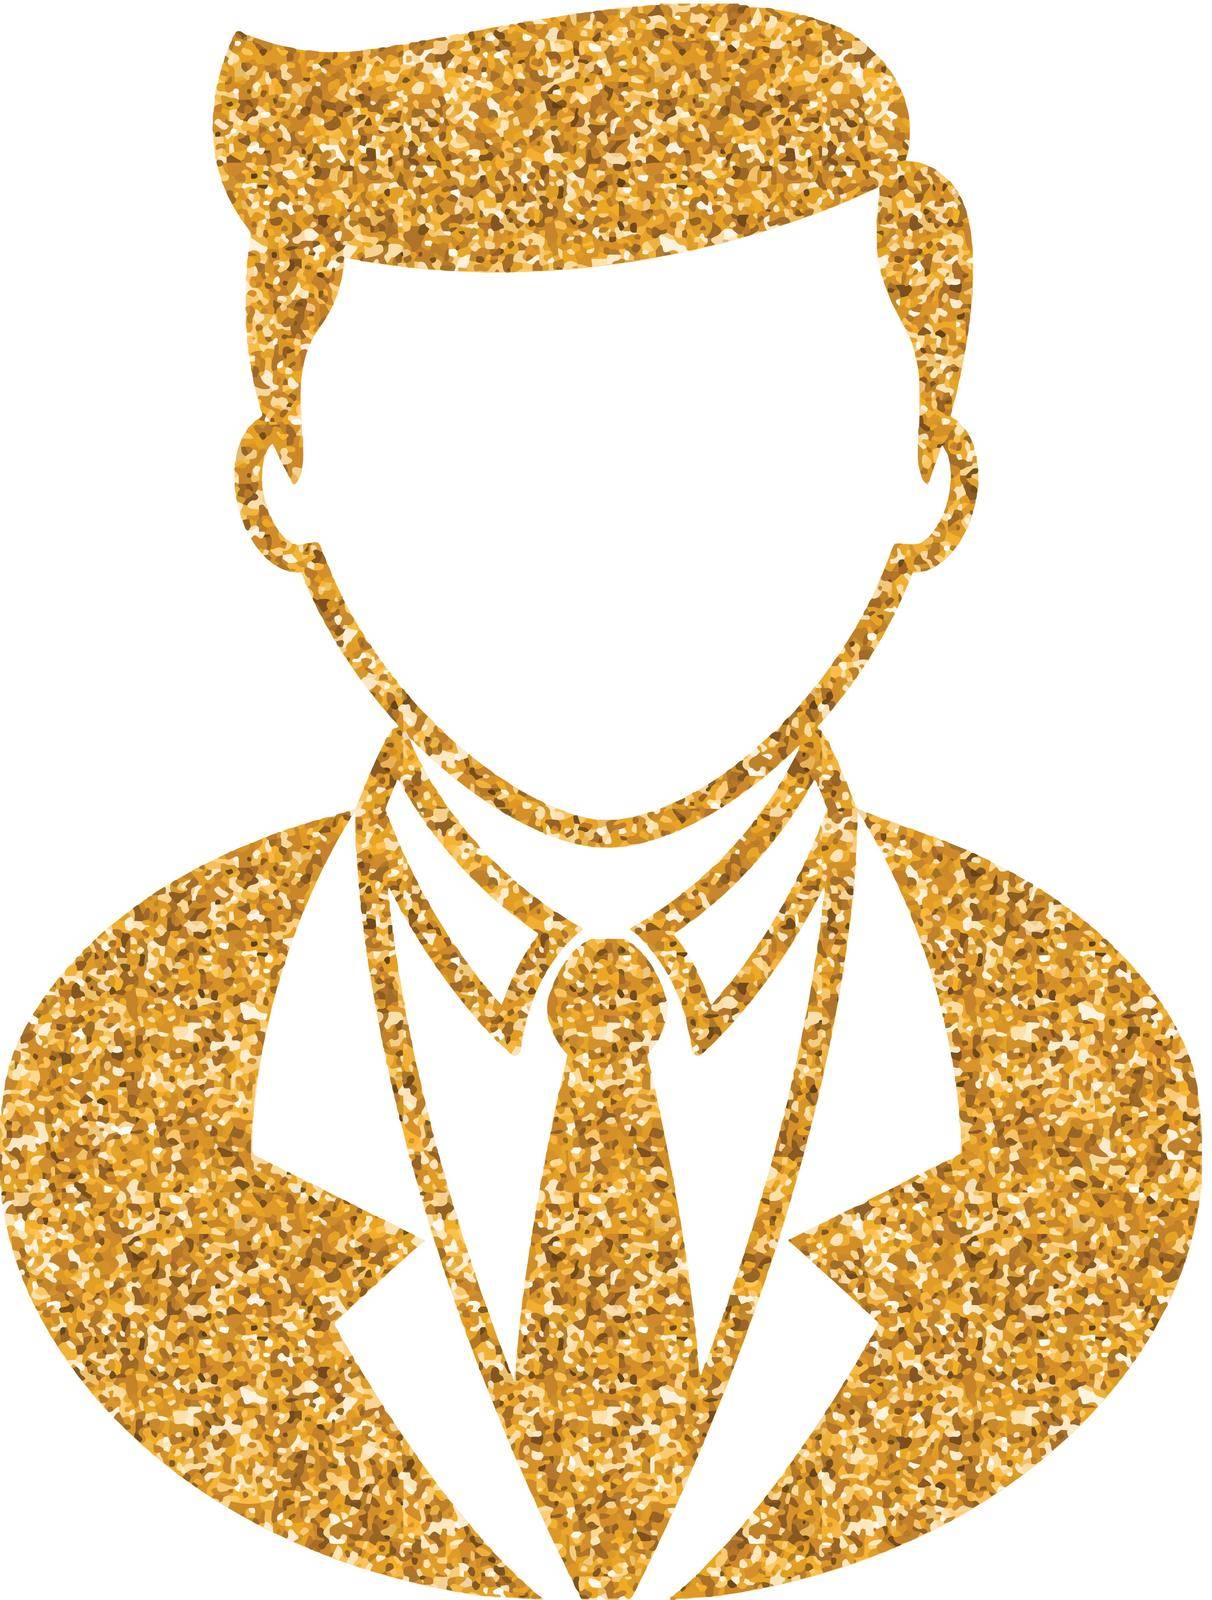 Businessman icon in gold glitter texture. Sparkle luxury style vector illustration.